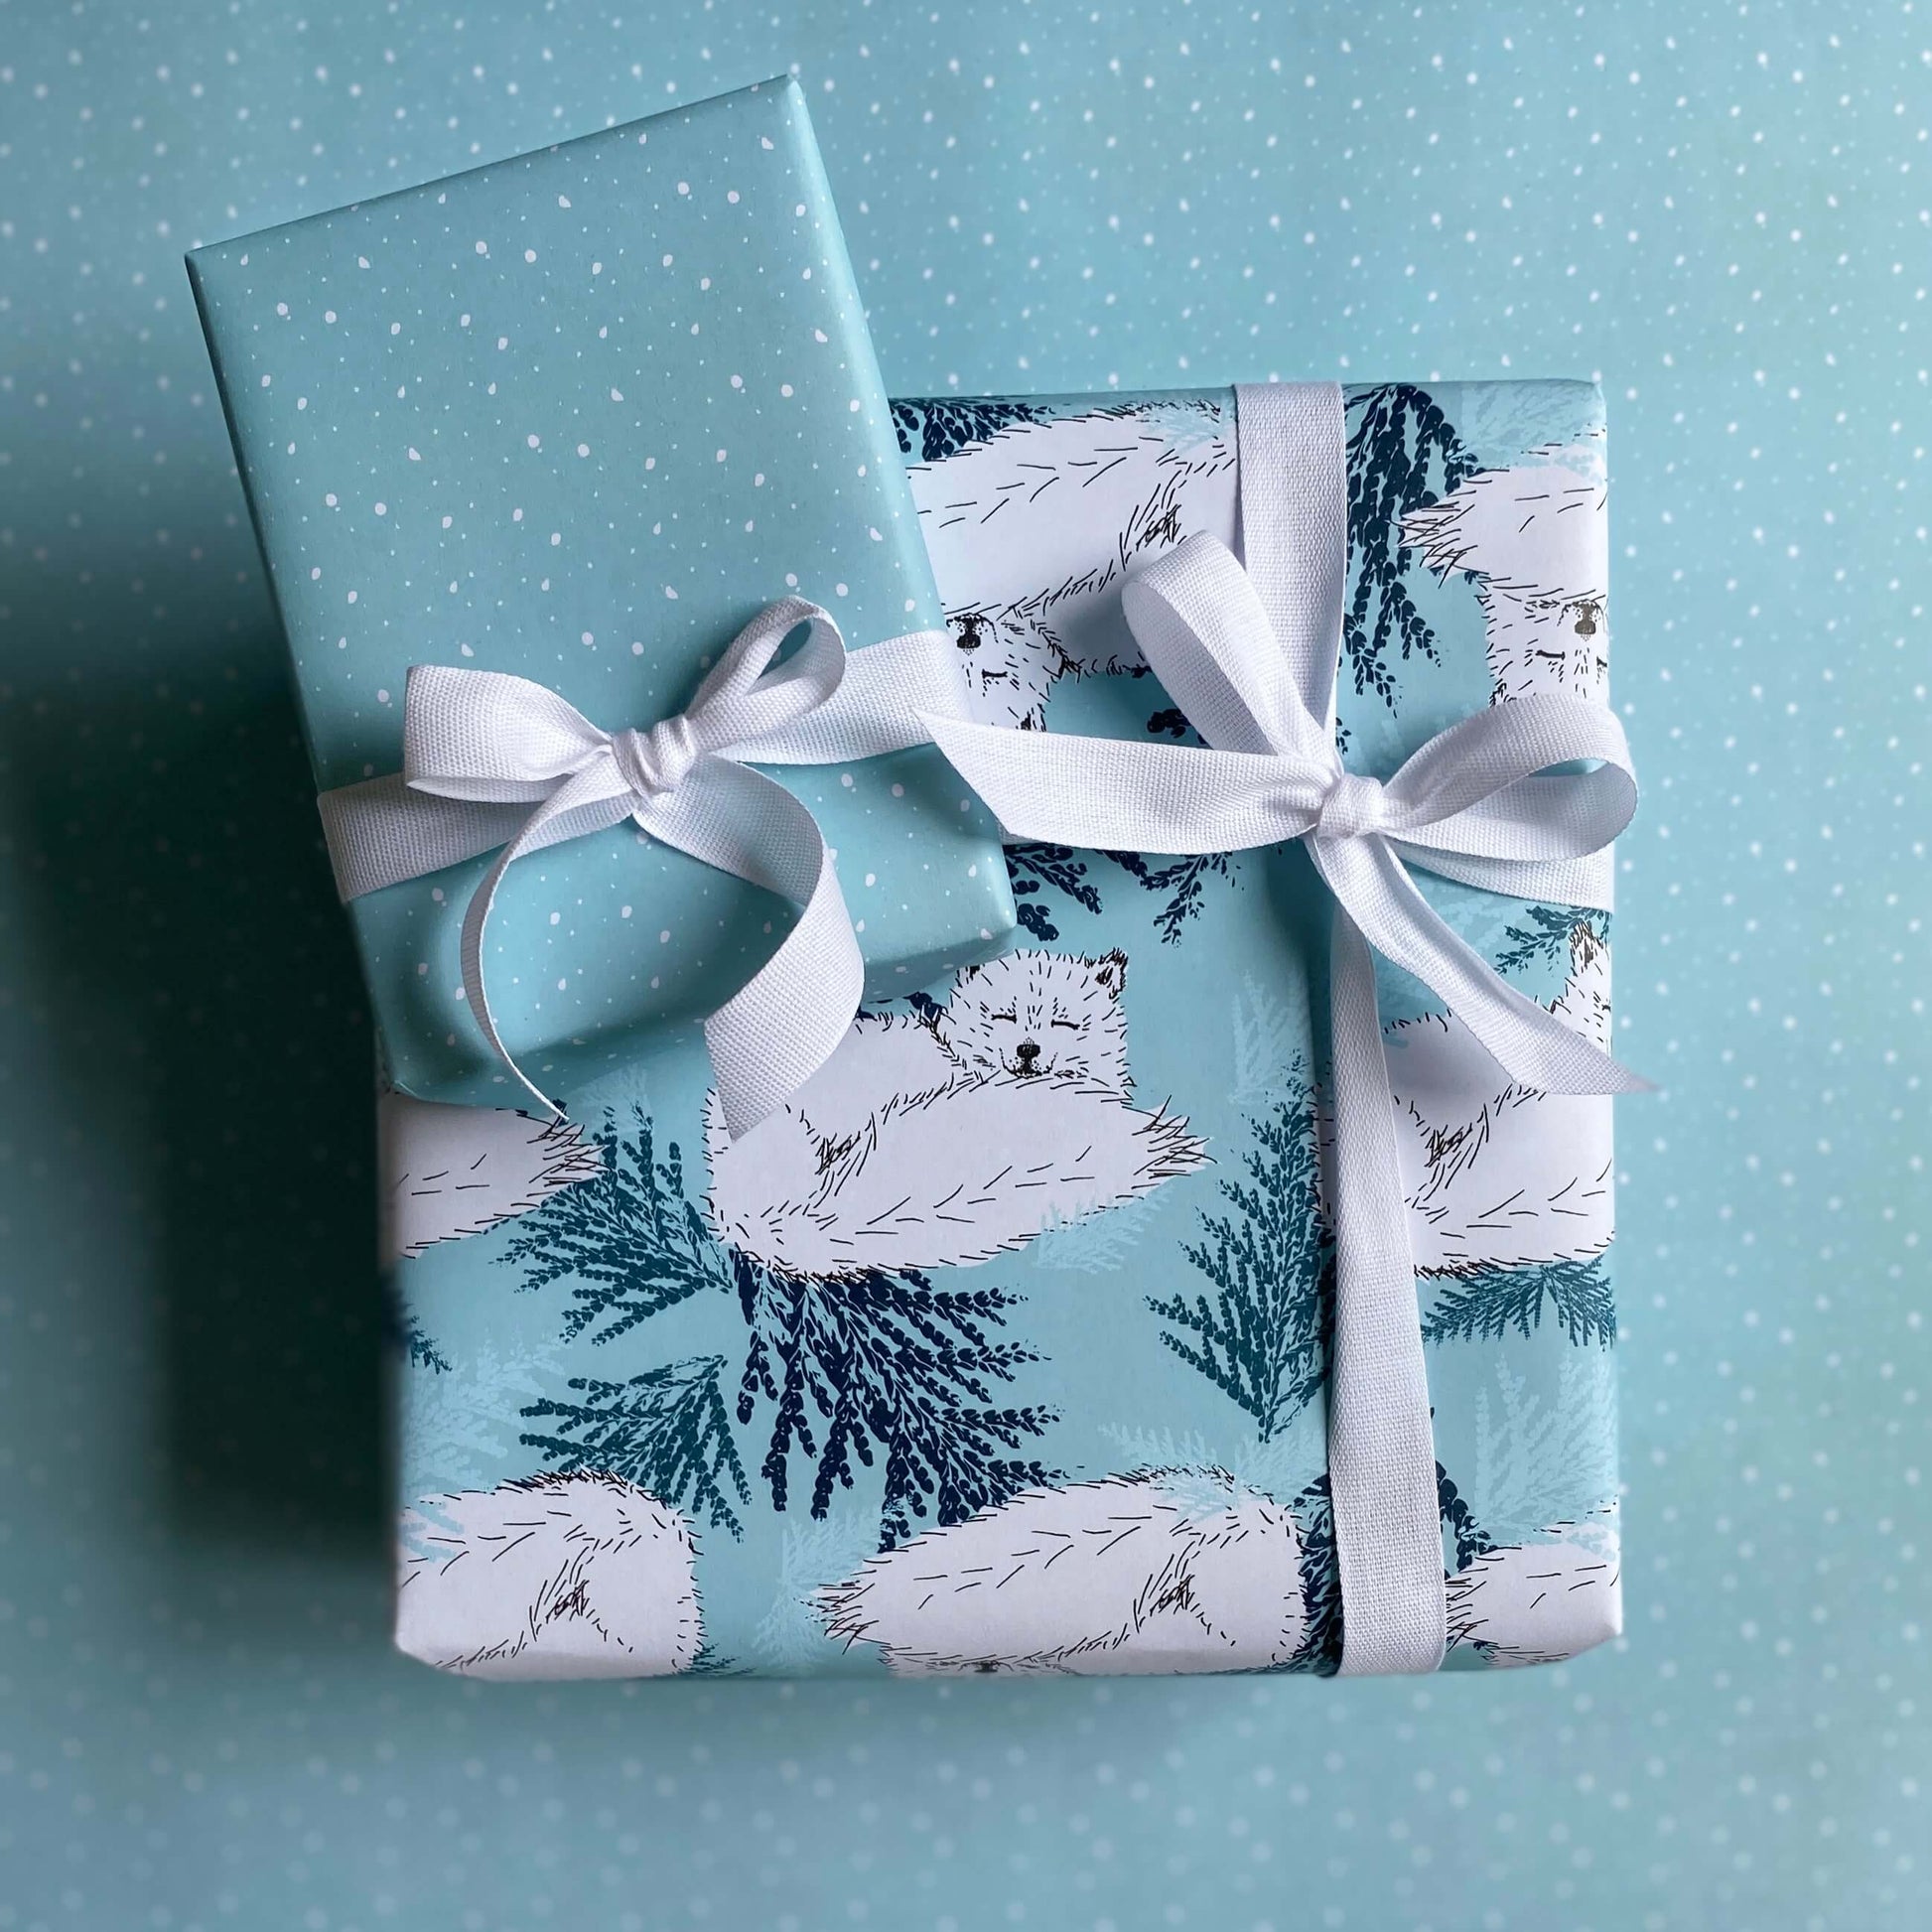 Polar Bear Hanukkah Gift Wrap, Wrapping Paper